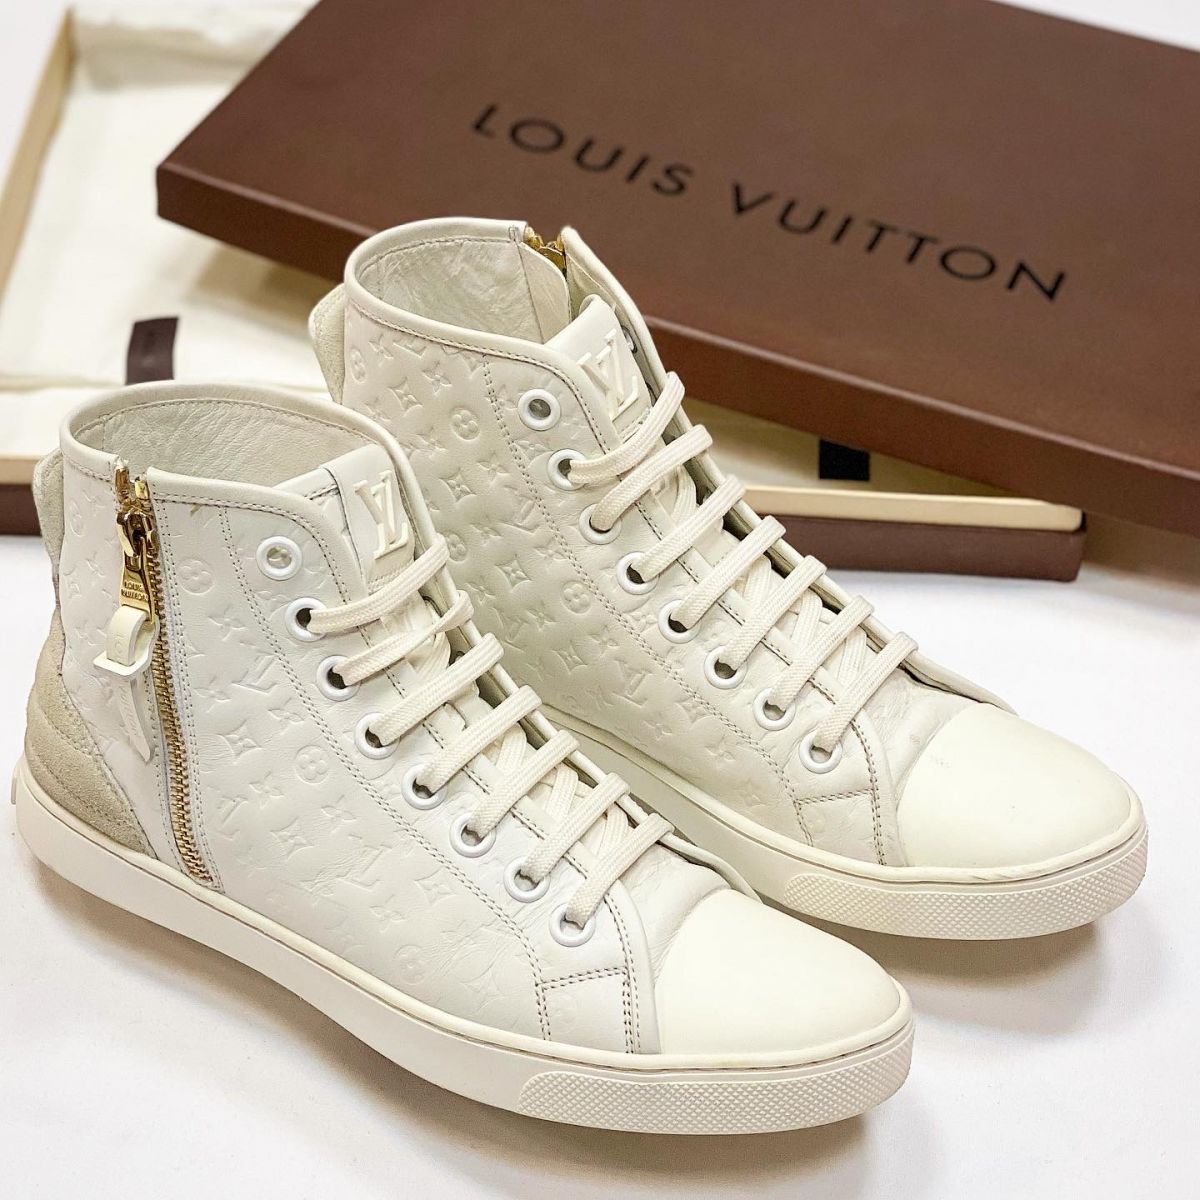 Кеды Louis Vuitton размер 37.5 цена 15 385 руб 